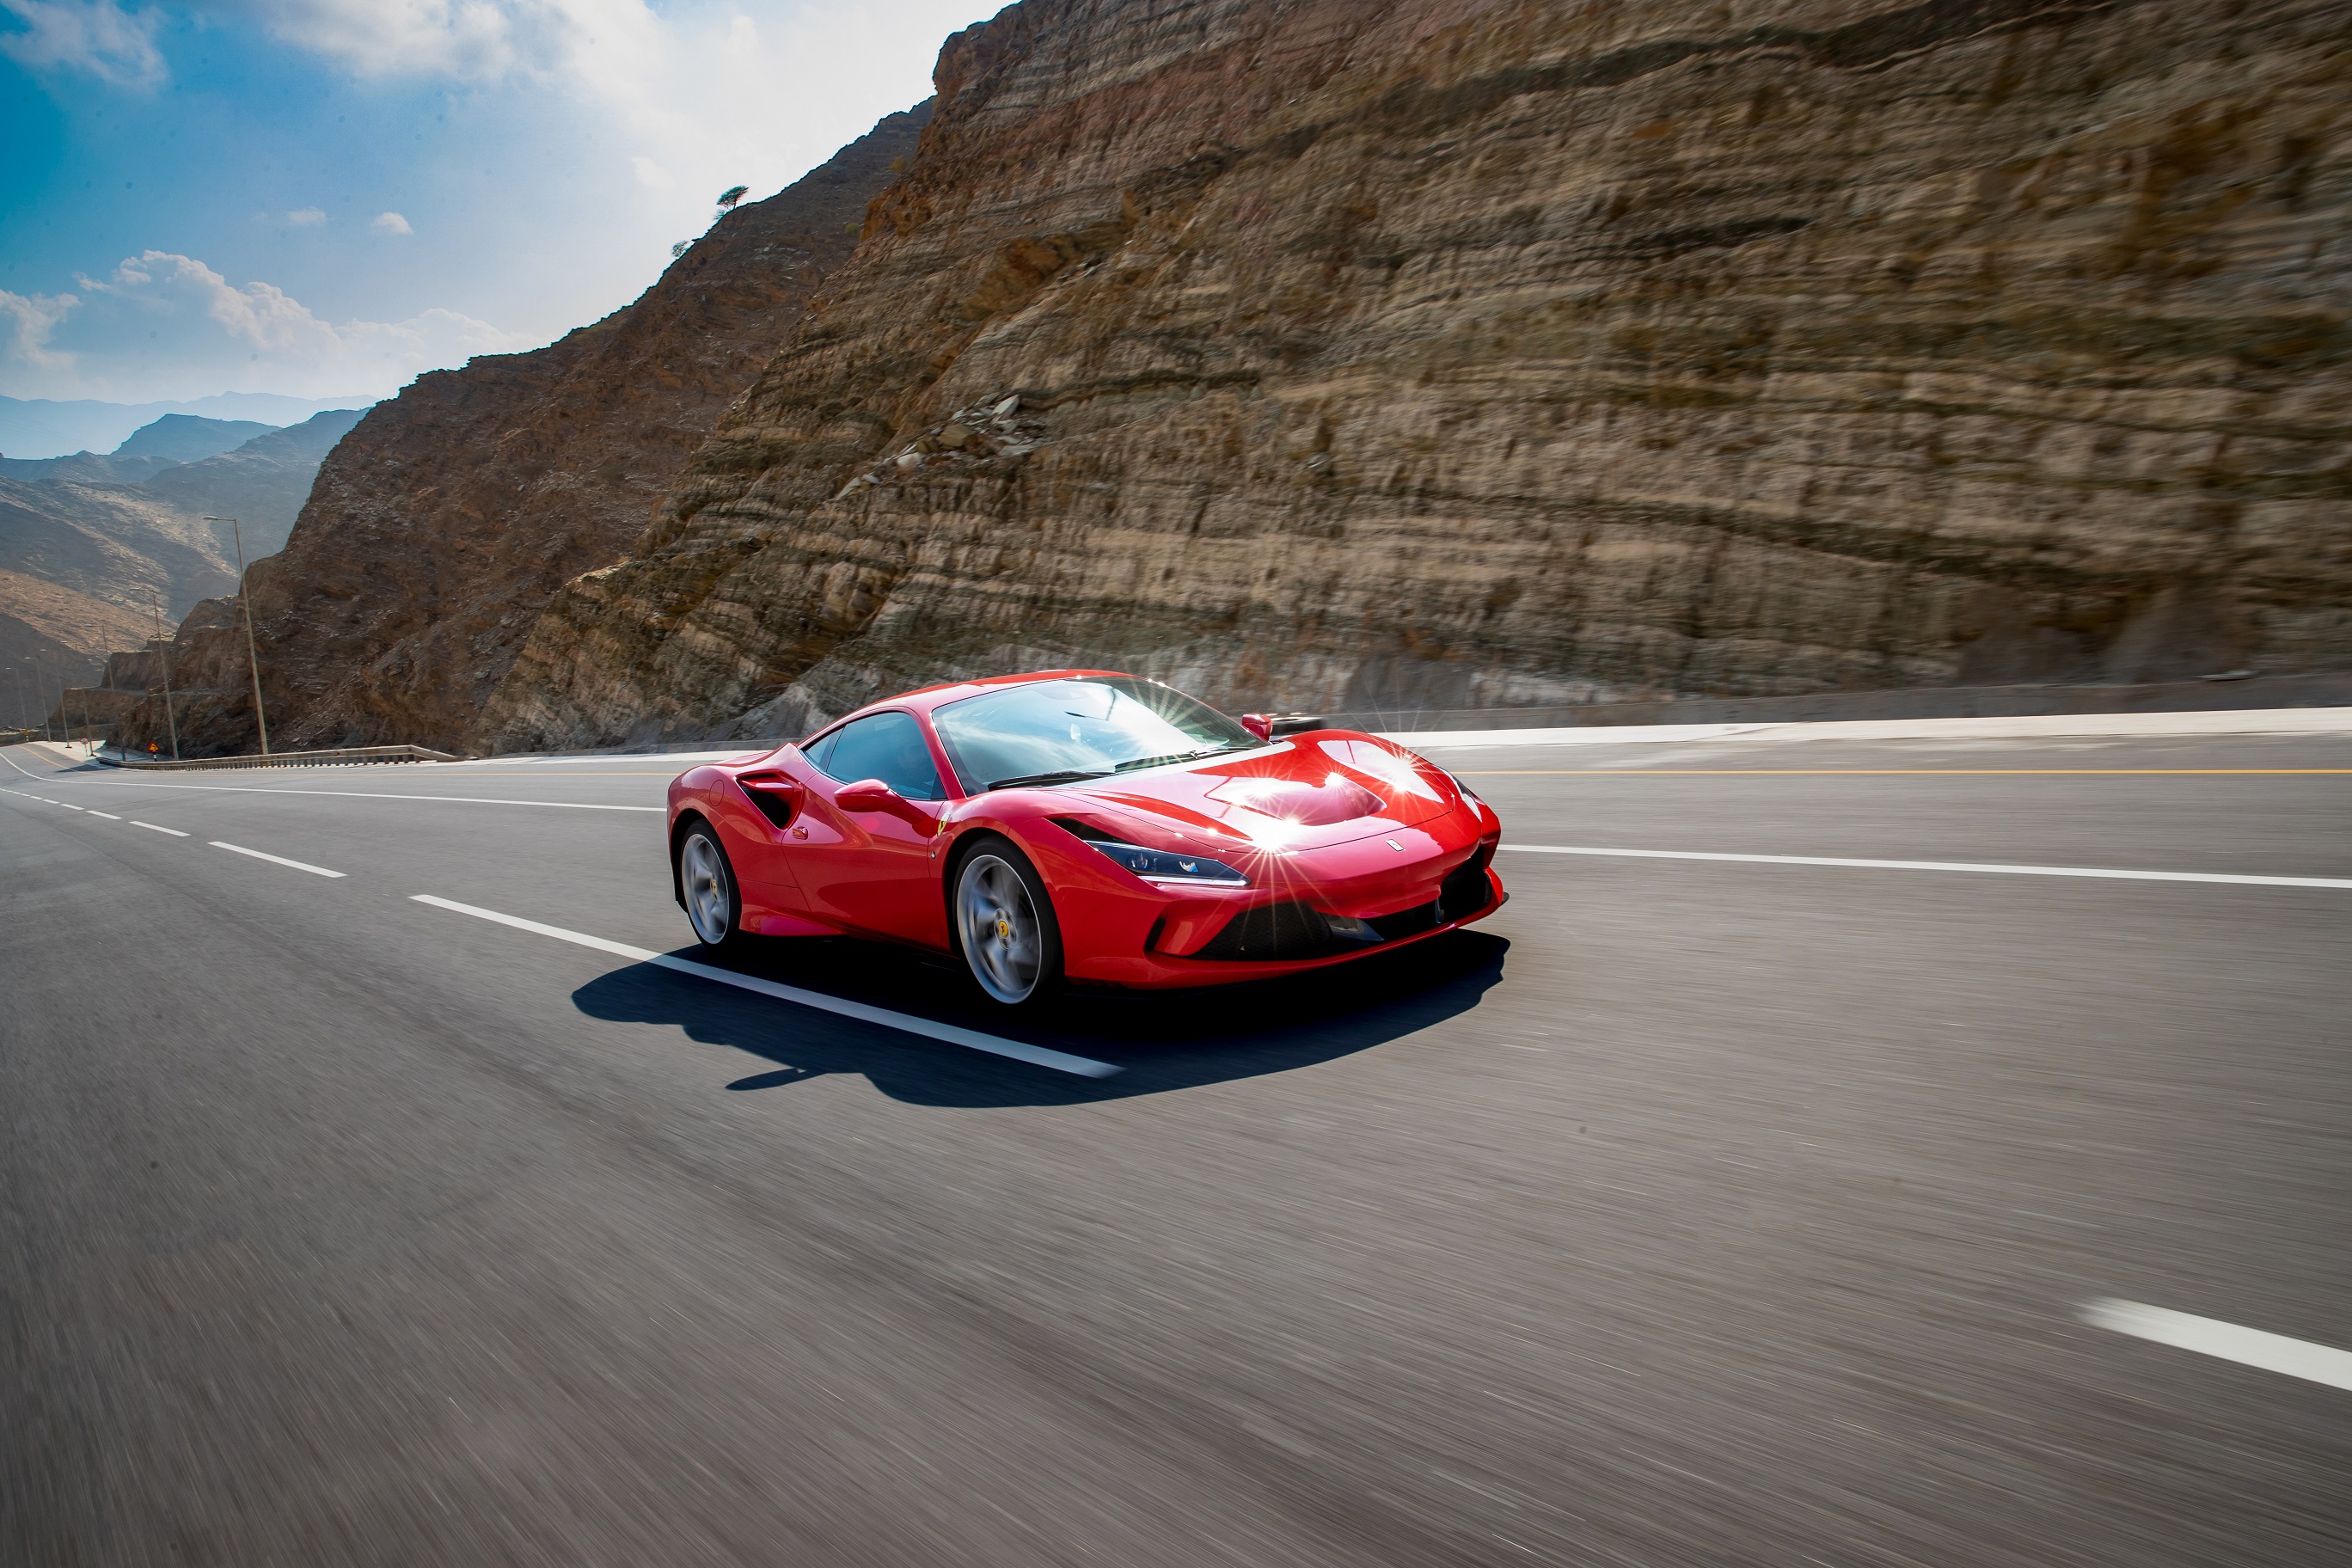 Ferrari enthusiasts enjoy the Ferrari F8 Tributo on the beautiful mountain roads of Oman